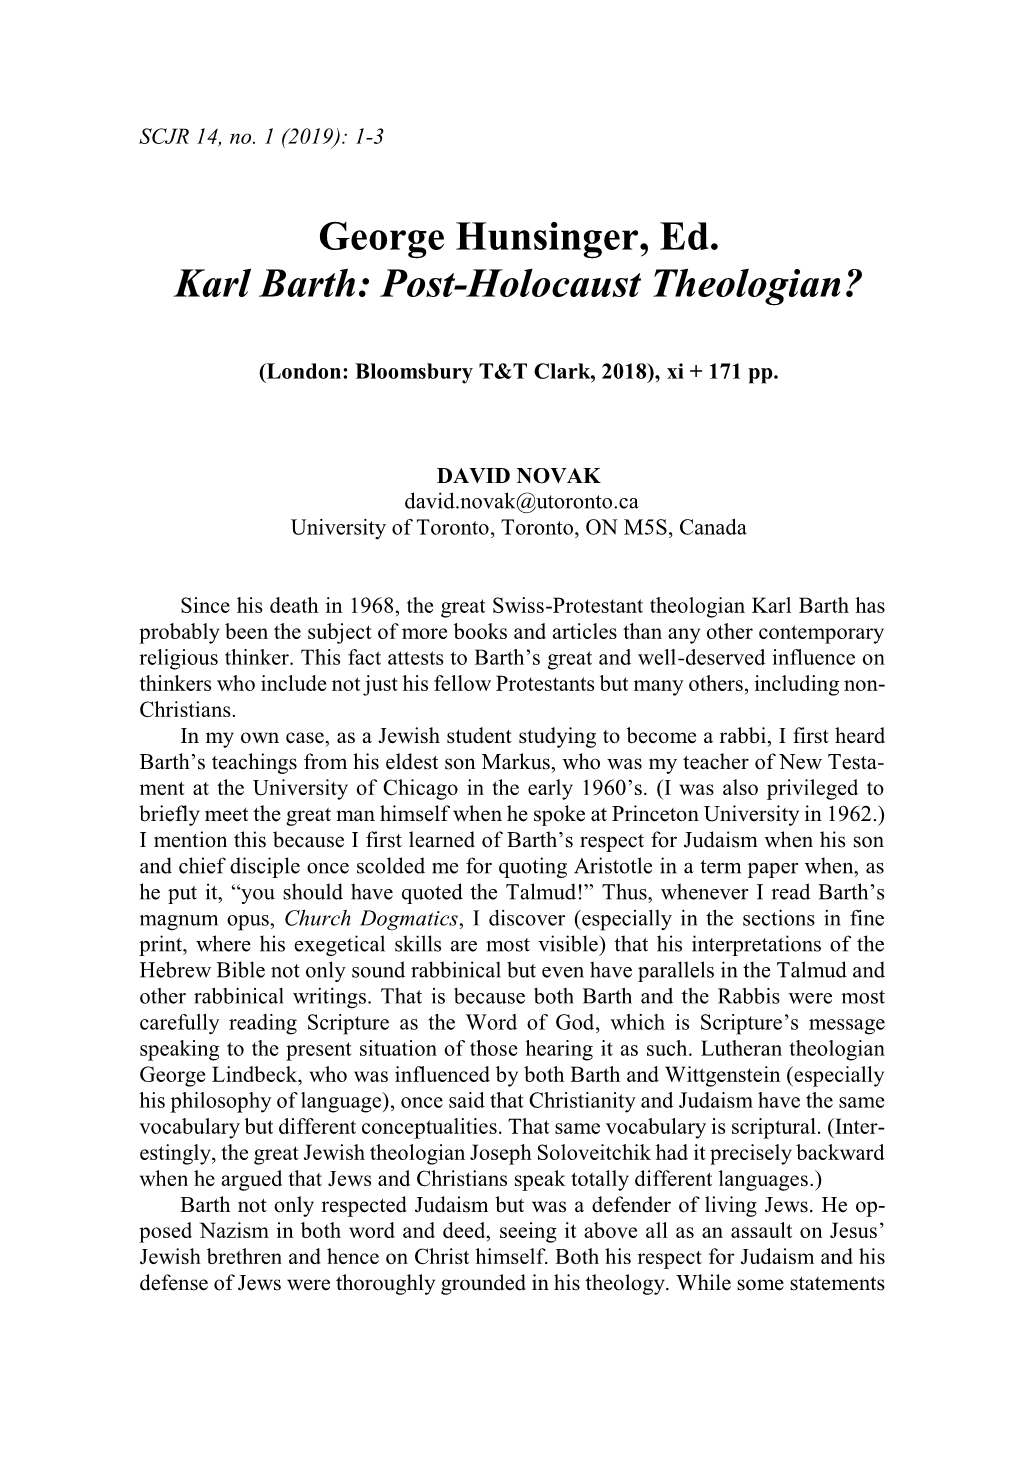 George Hunsinger, Ed. Karl Barth: Post-Holocaust Theologian?